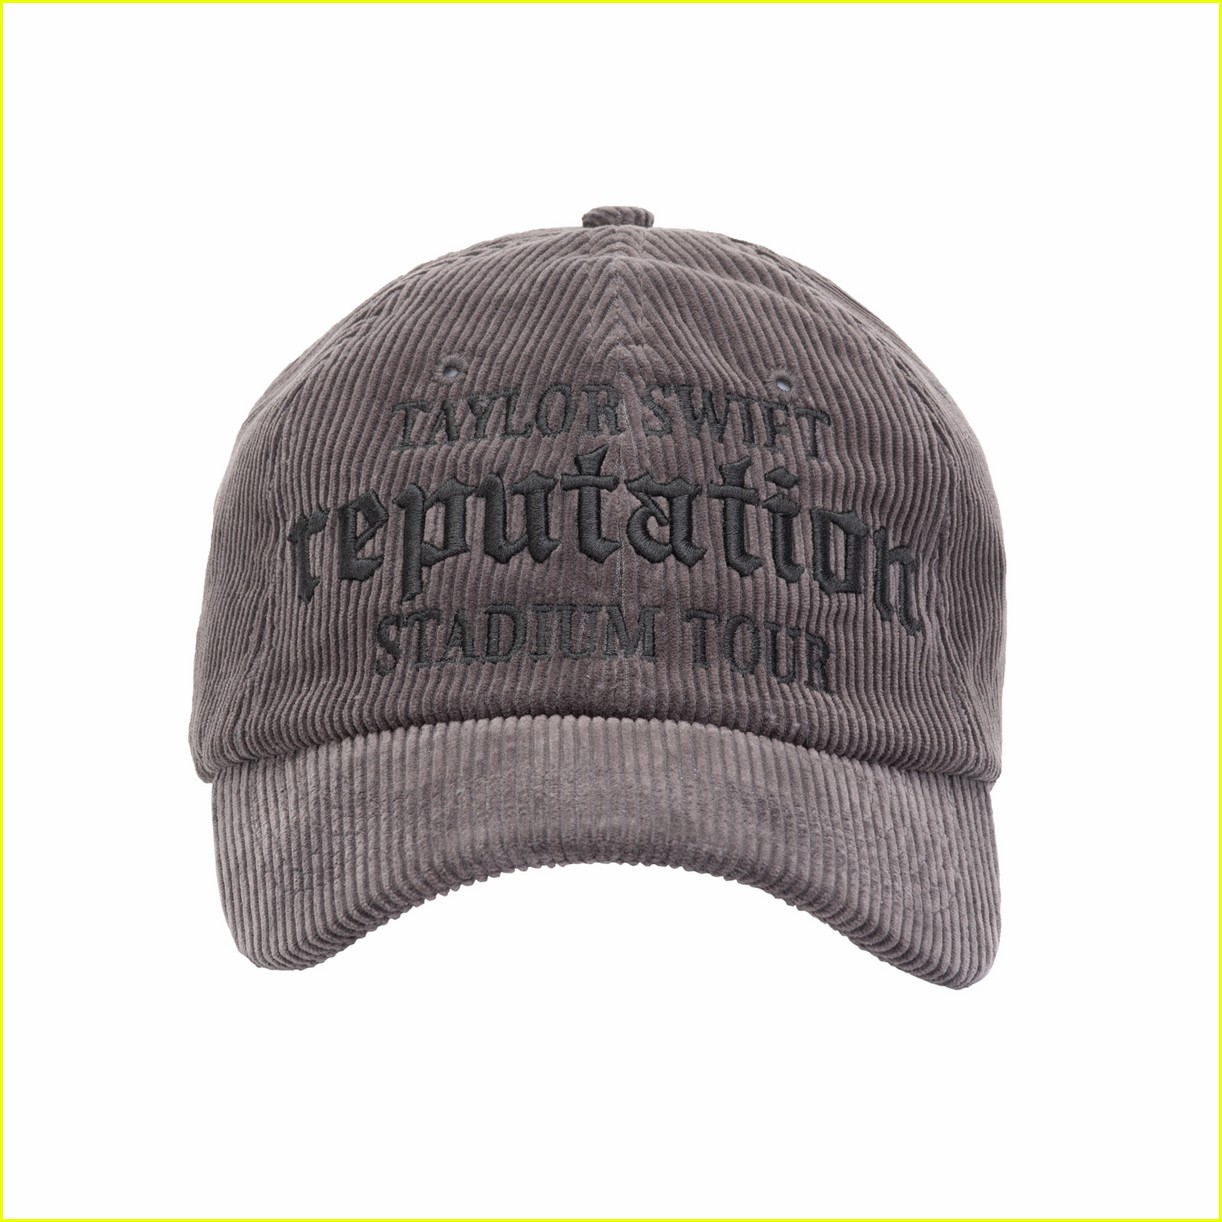 taylor swift reputation tour merchandise 04